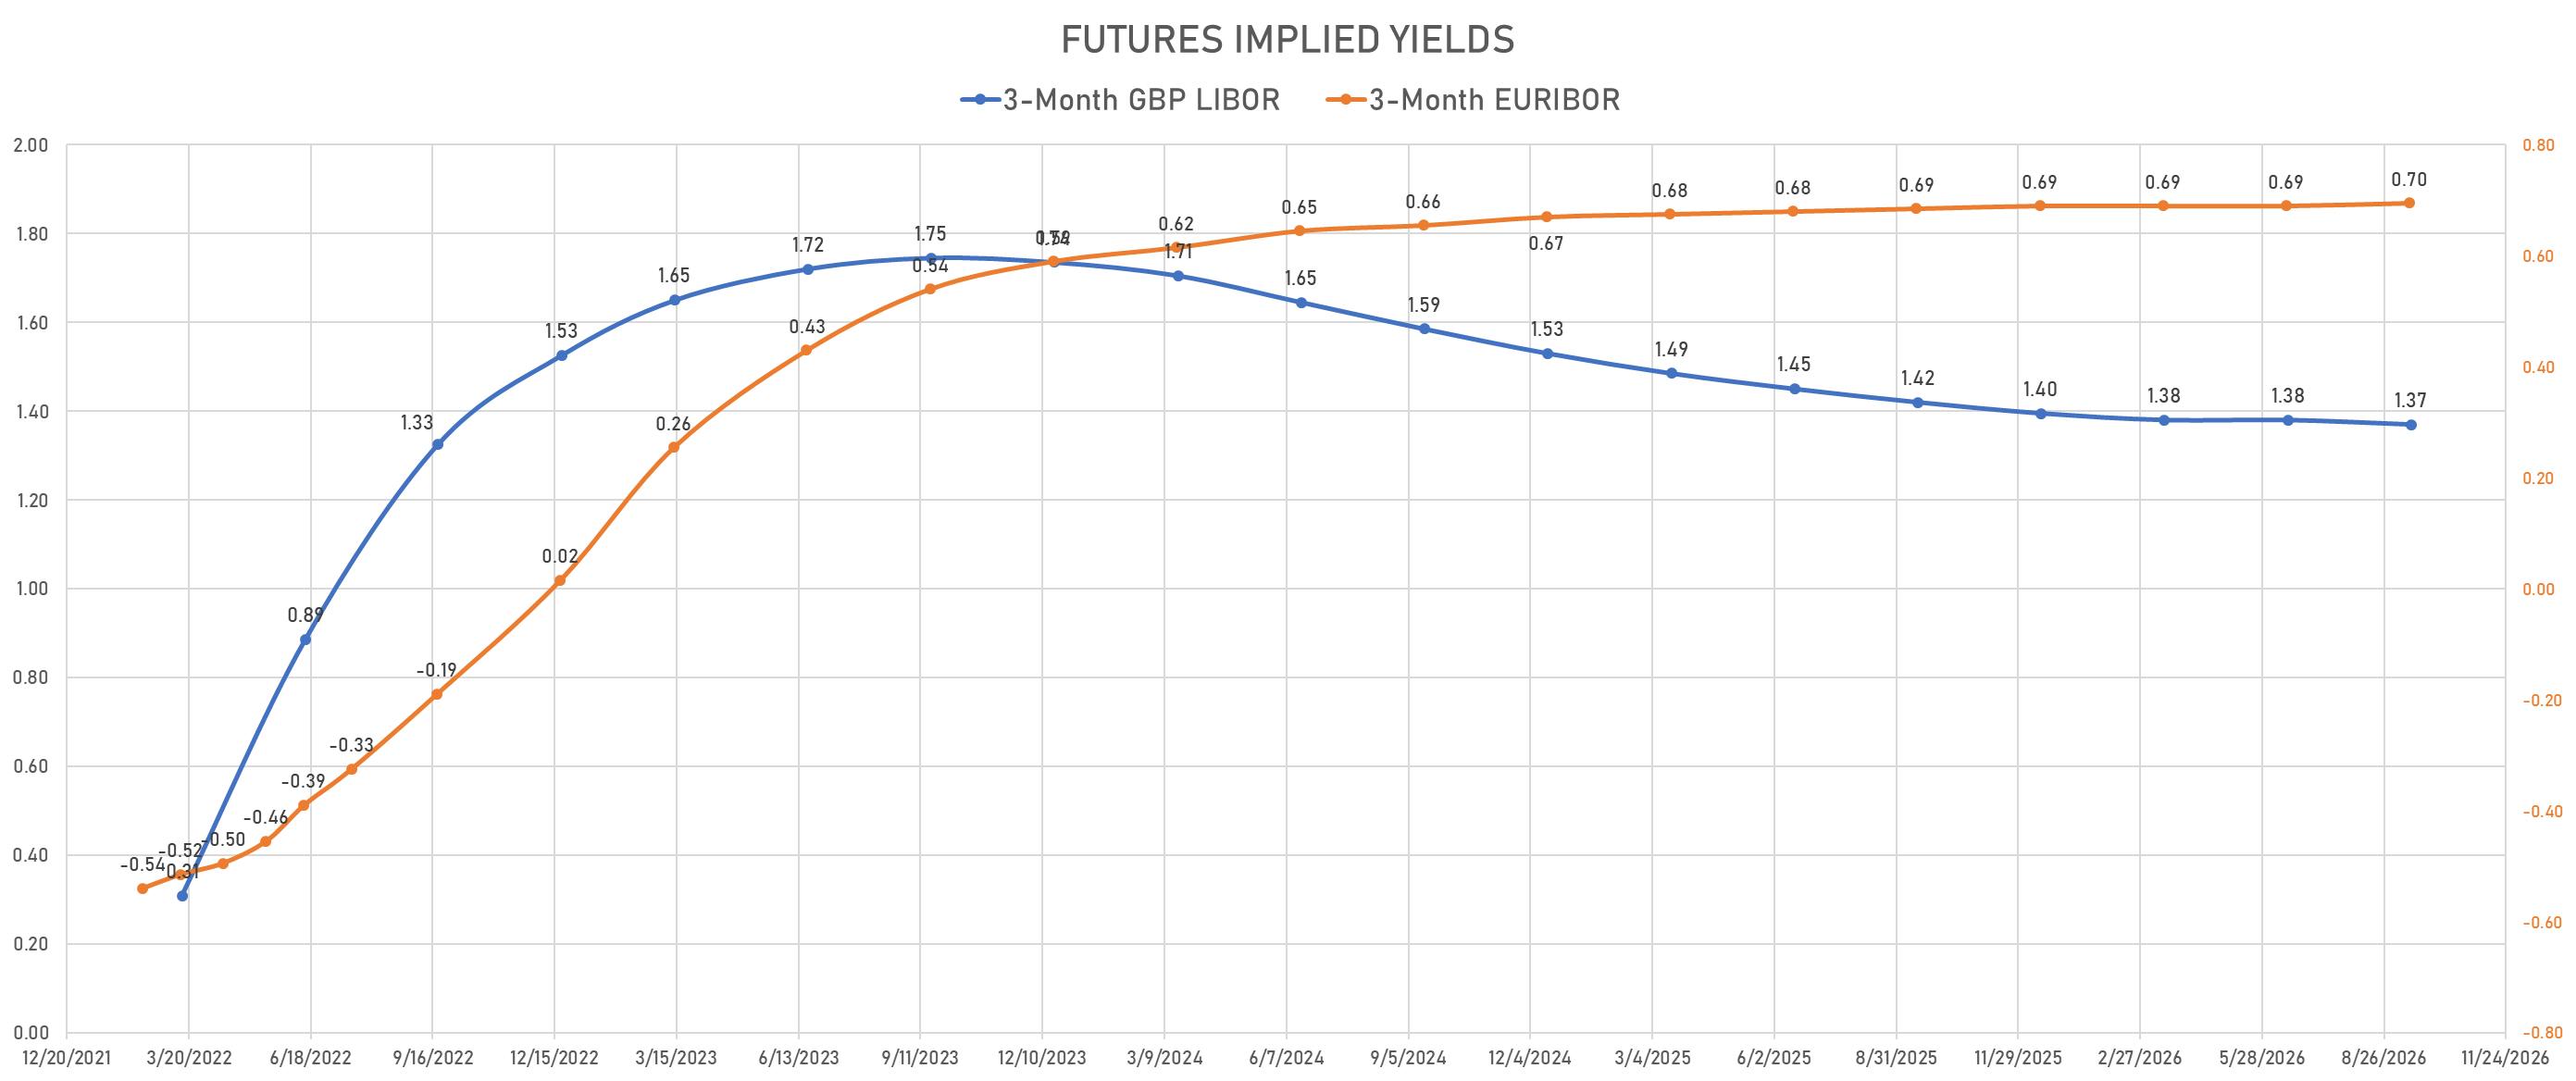 Euro & GBP Money Markets Futures Implied Yields | Sources: phipost.com, Refinitiv data